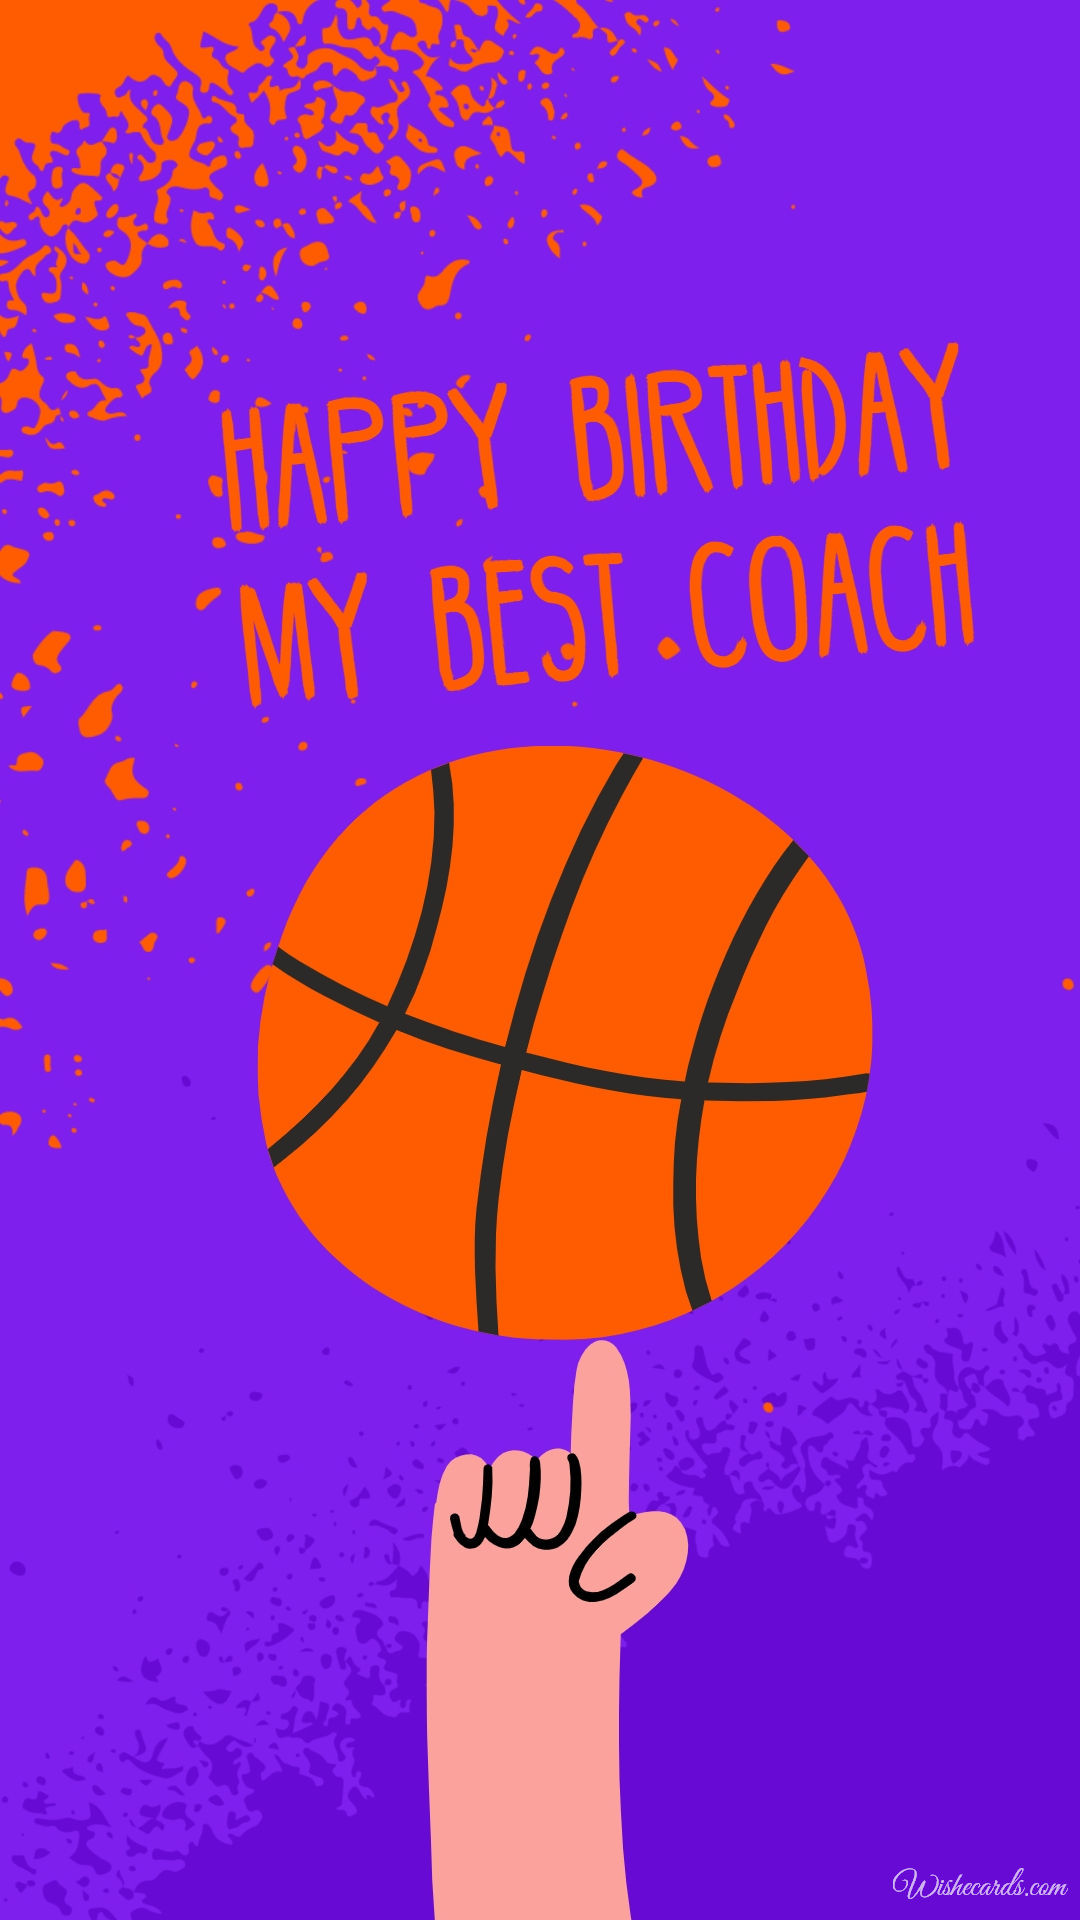 Happy Birthday Basketball Coach Image